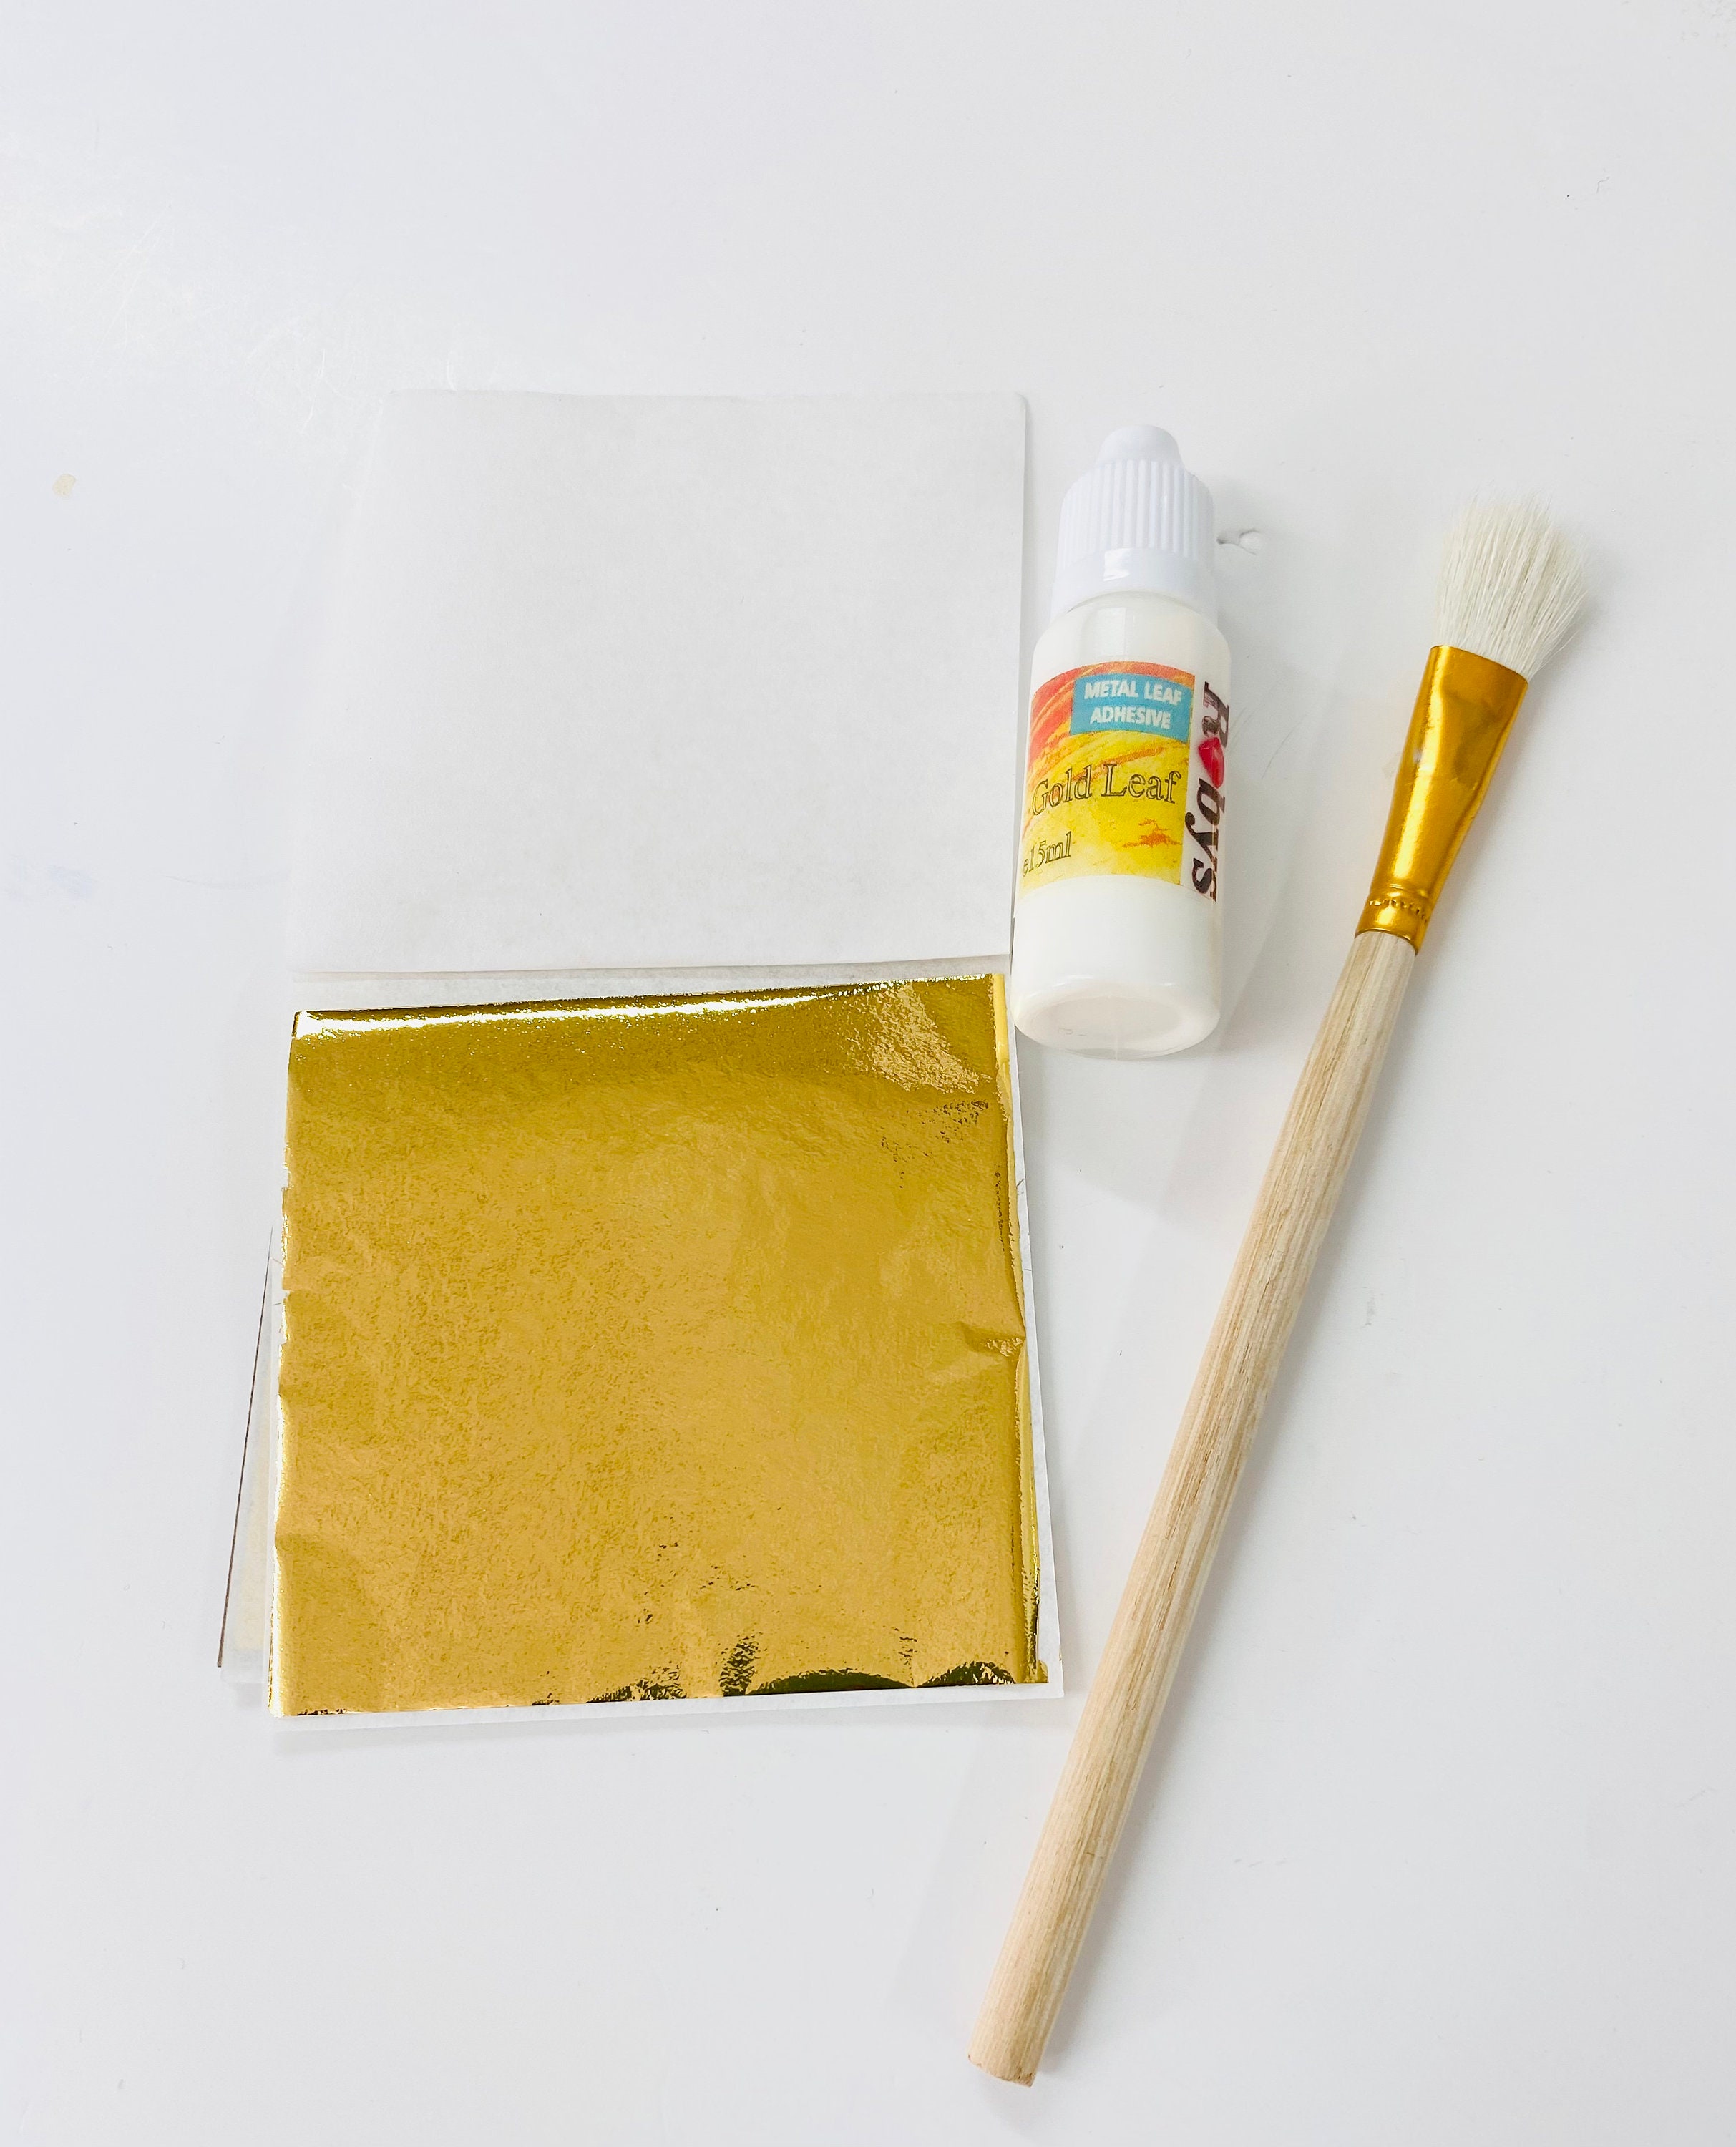 Gold Leaf Gilding Adhesive 60ml Tub & Gold Gilding Goat Hair Brush 